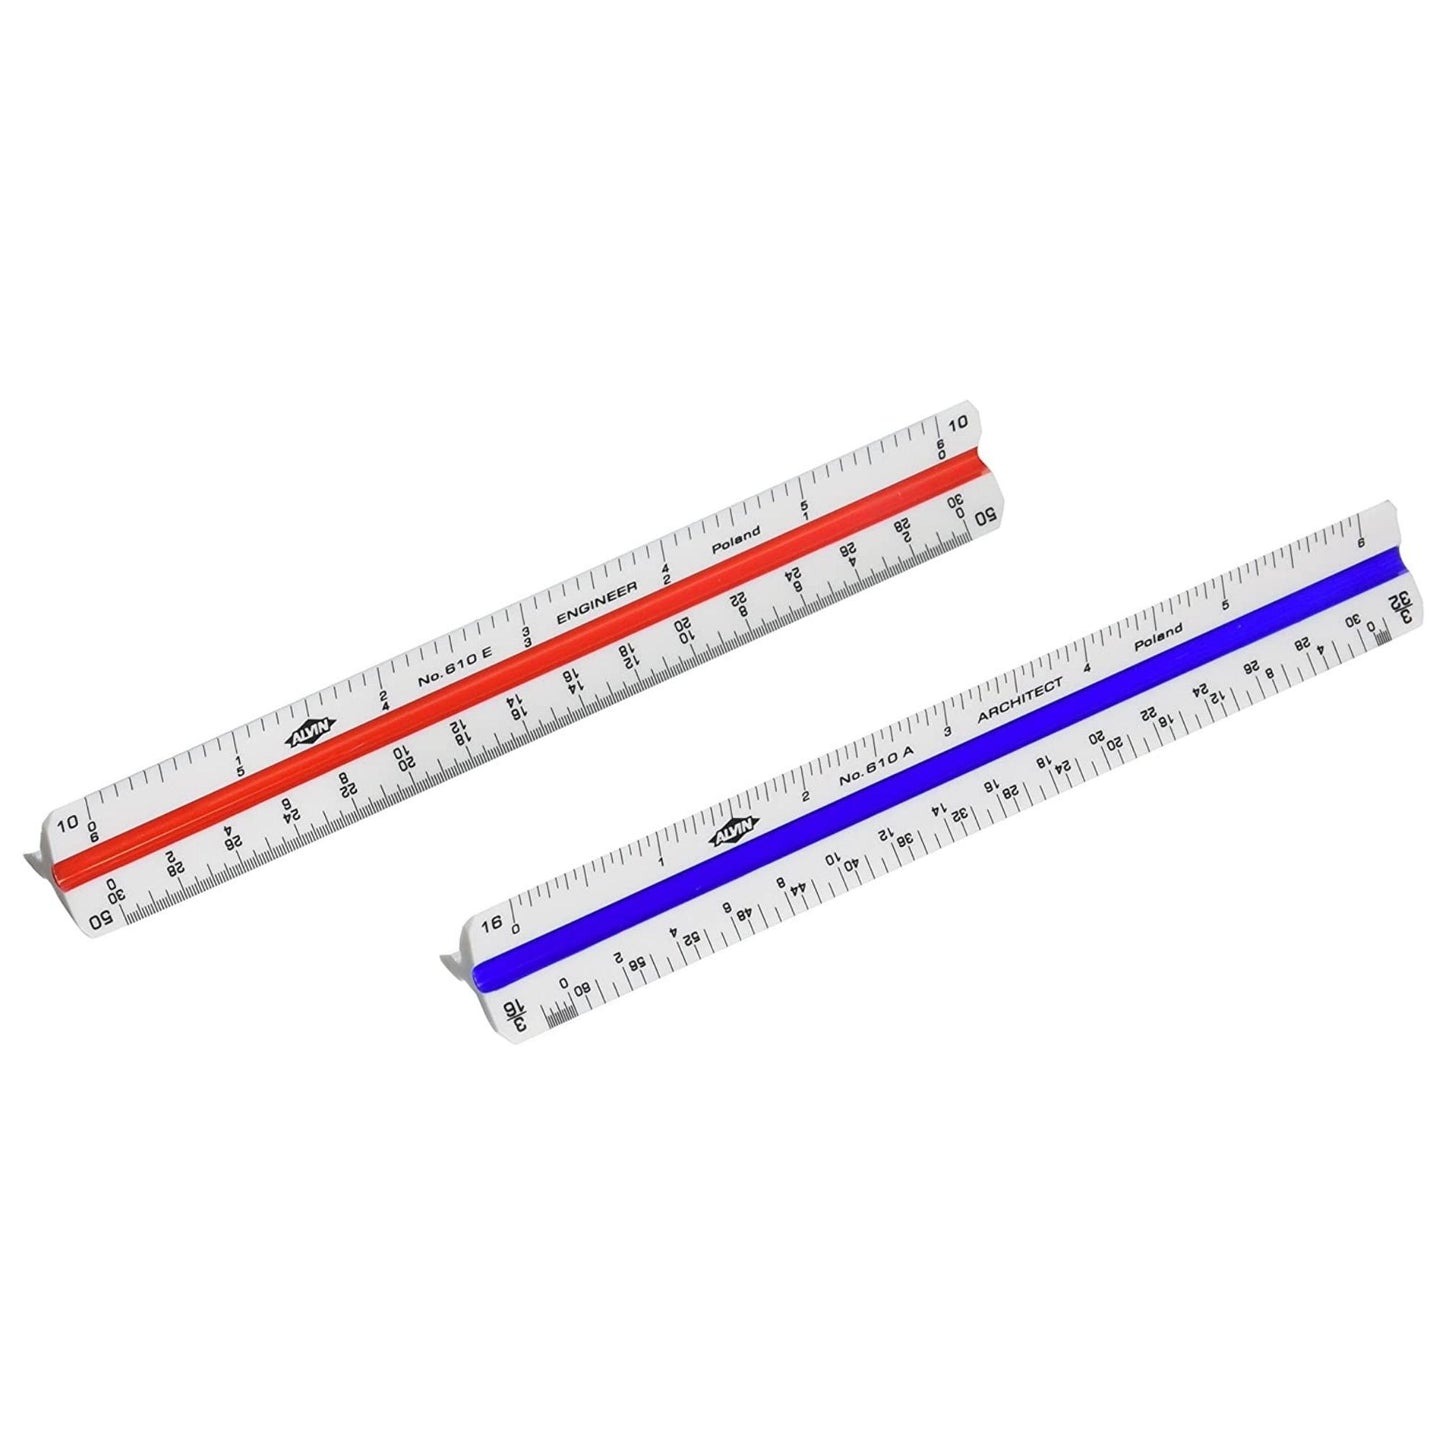 Metric Triangular Scale 1:33 1/2 – ALVIN Drafting, LLC